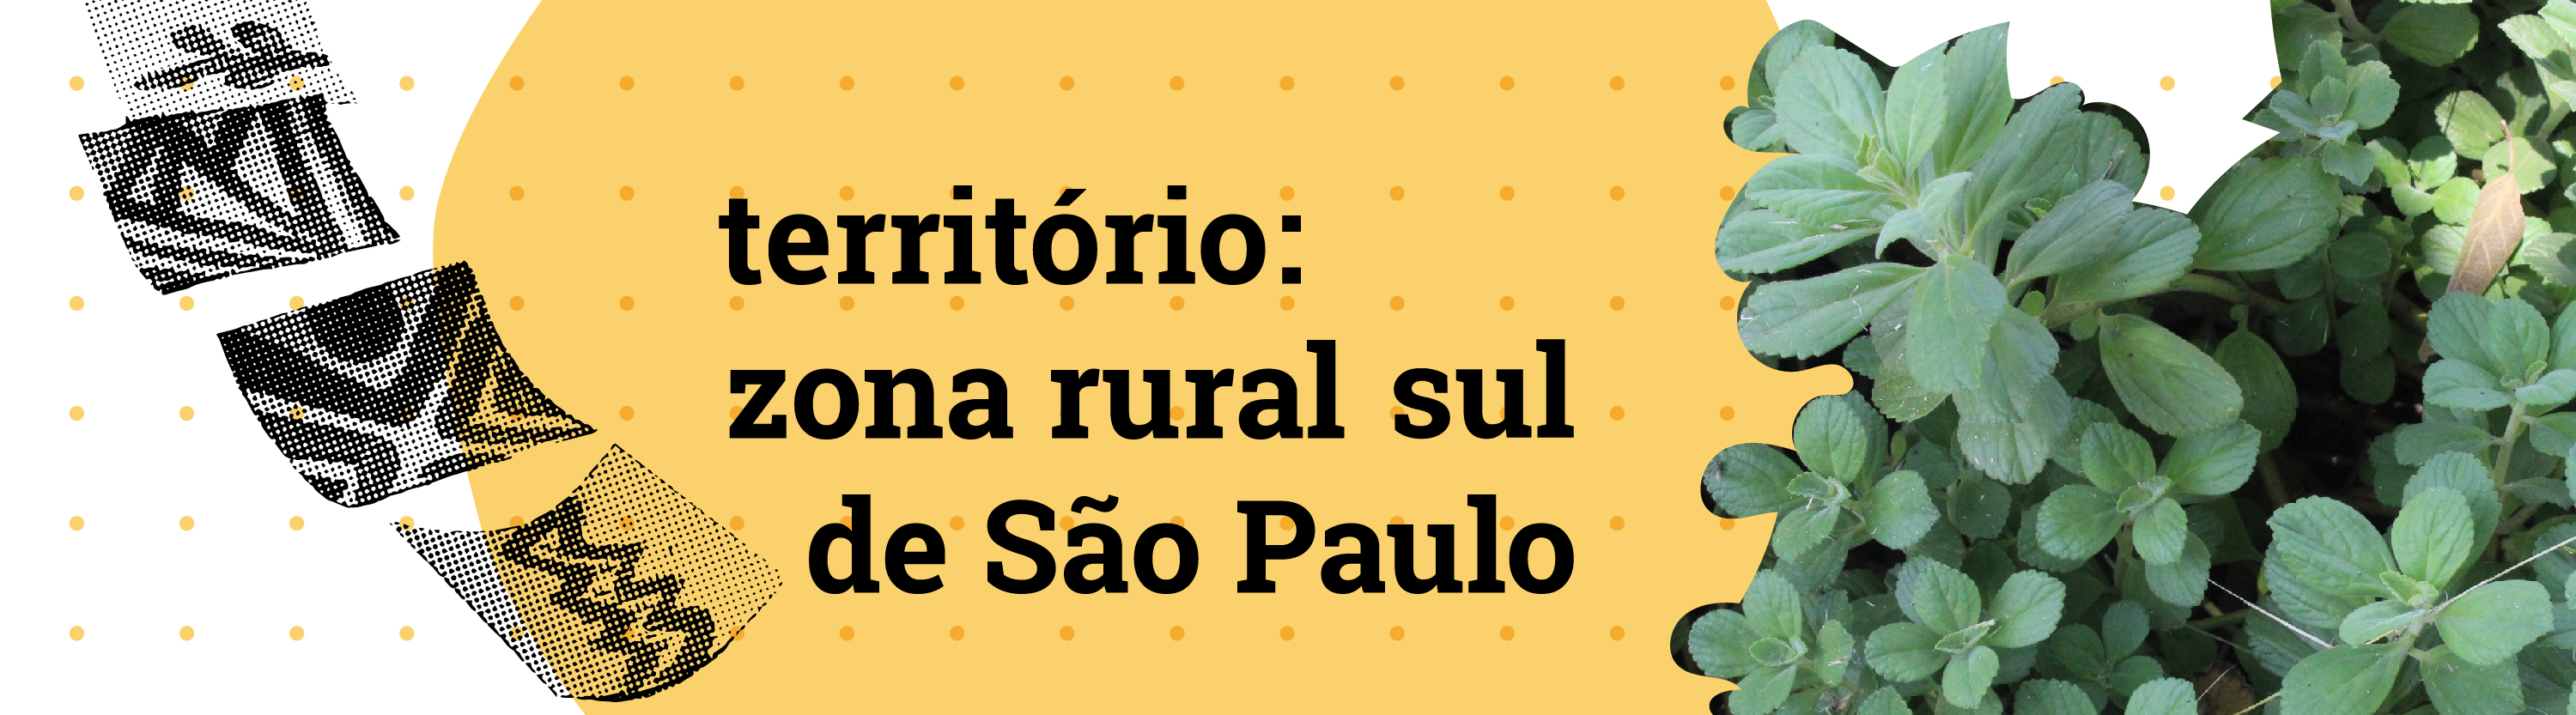 território: zona rural sul de São Paulo